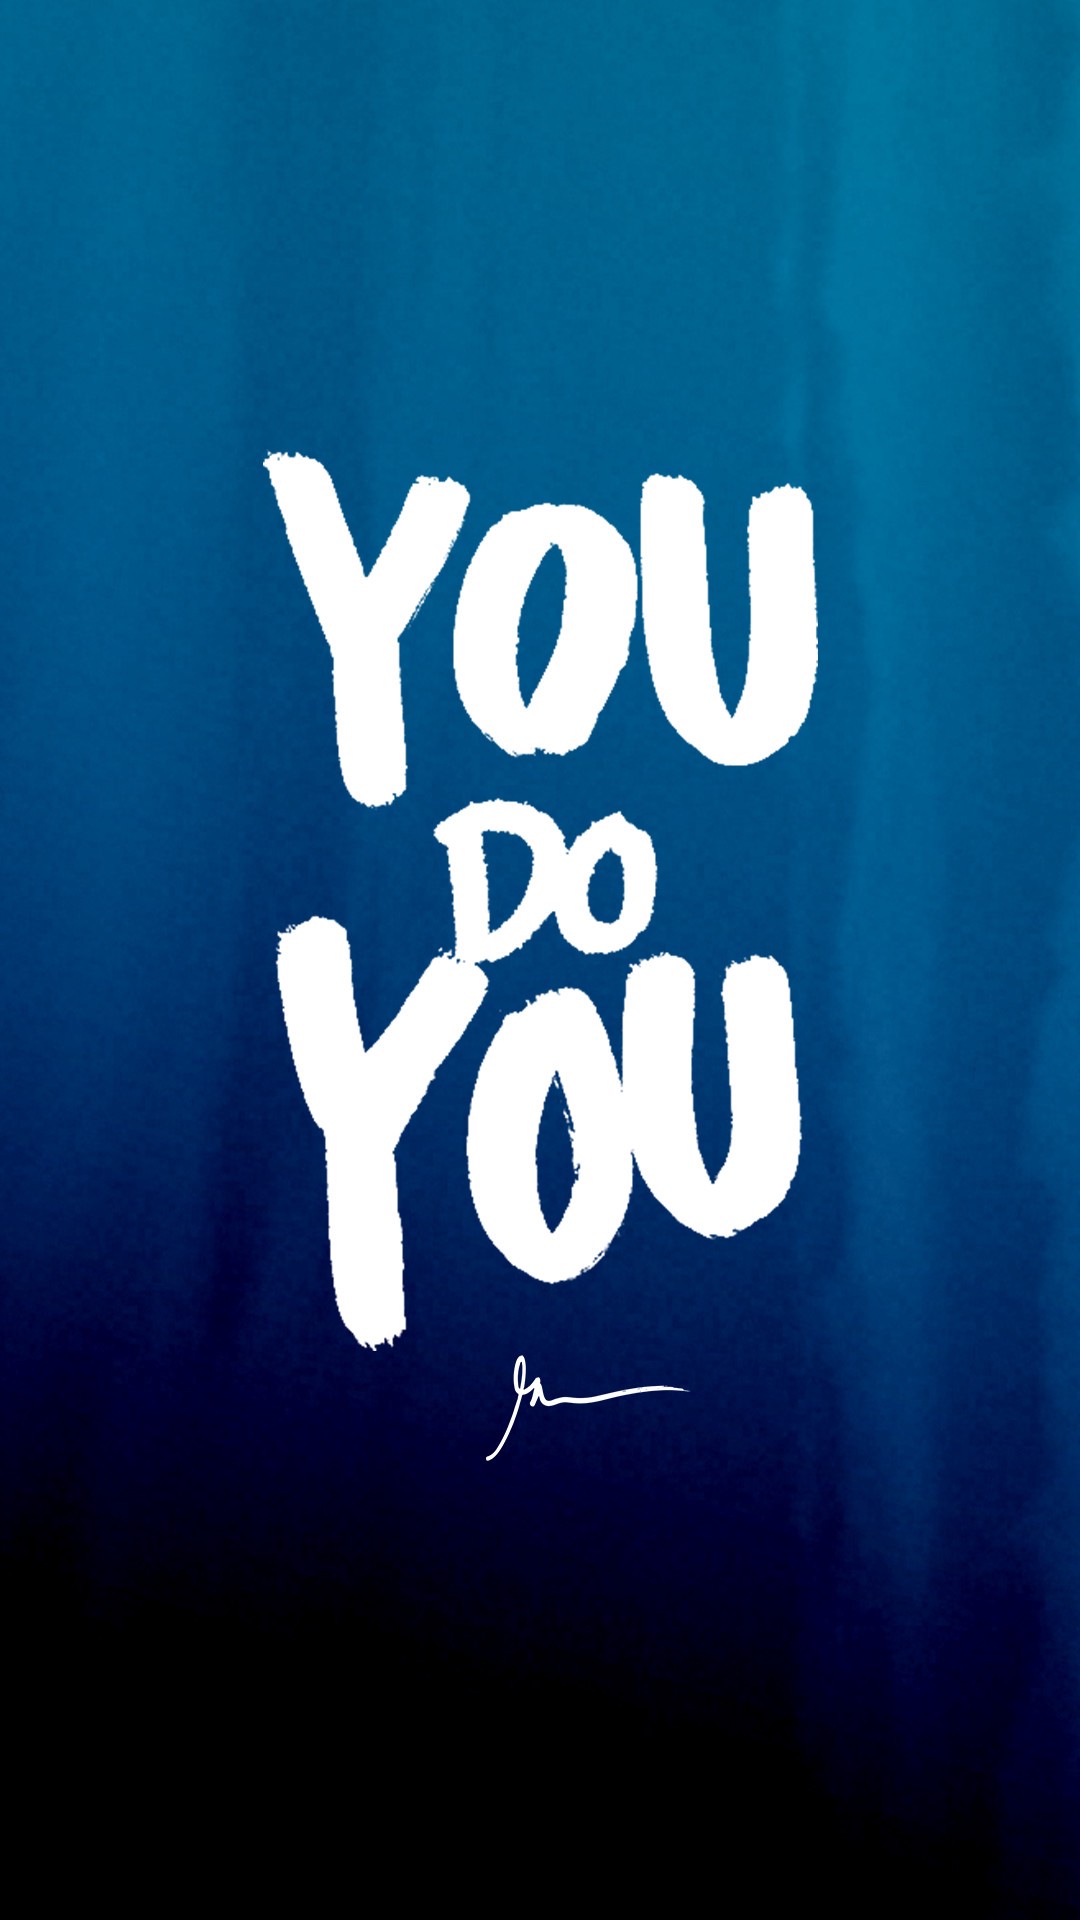 gary vaynerchuk wallpaper,font,text,blue,electric blue,logo